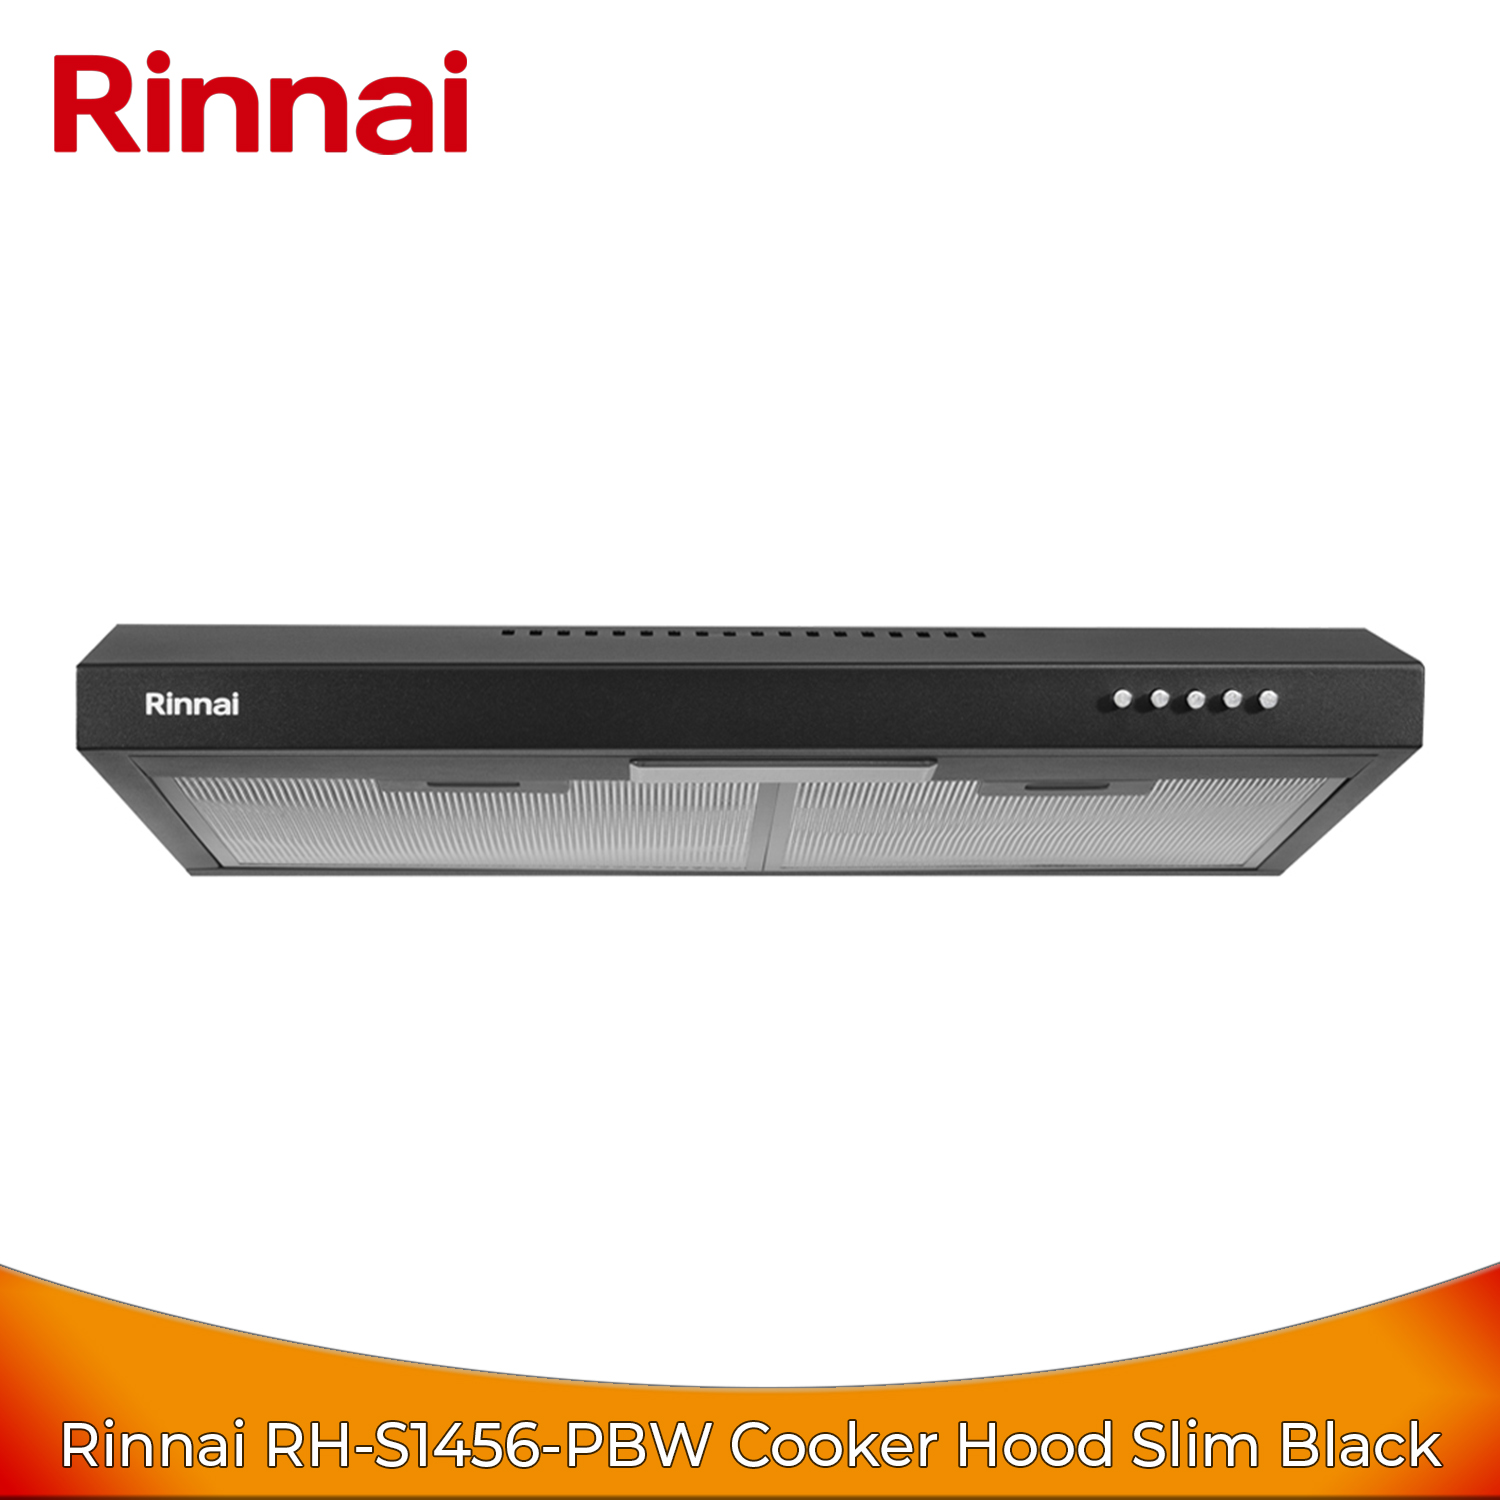 Rinnai RH-S1456-PBW Black Cooker Hood Slim - Penghisap Asap Dapur